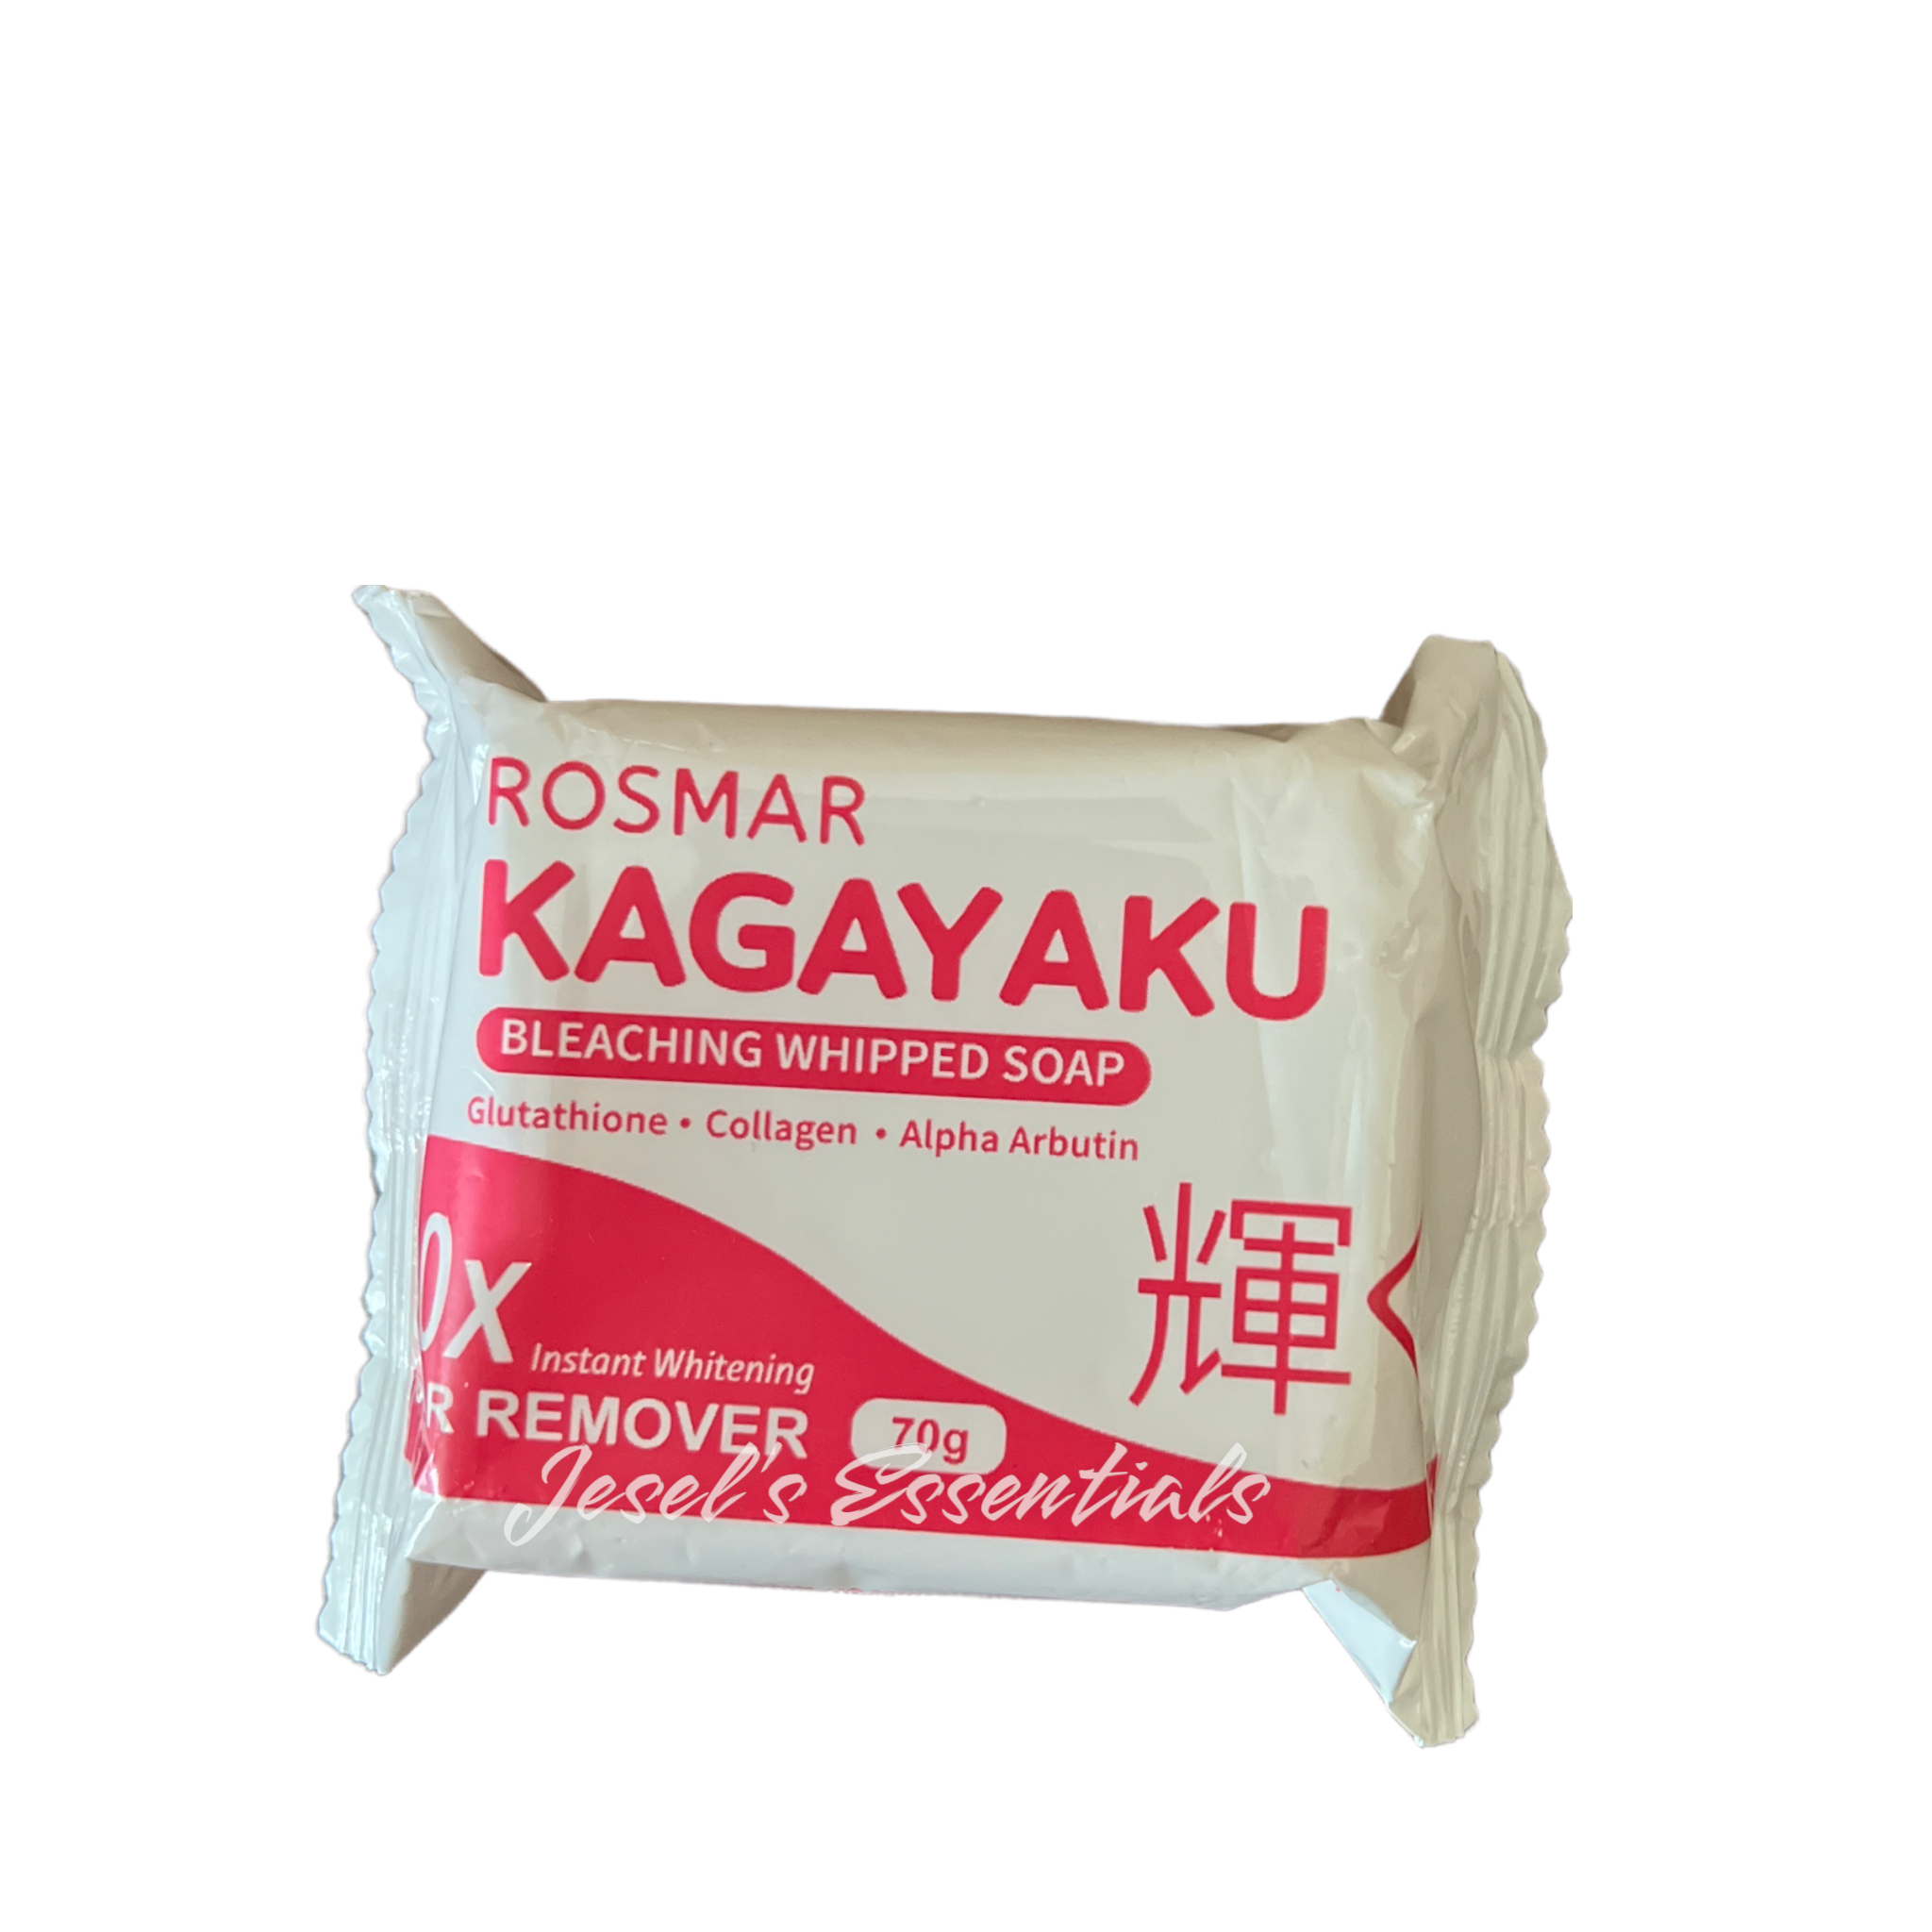 Rosmar Kagayaku Soap – Jesel's Essentials